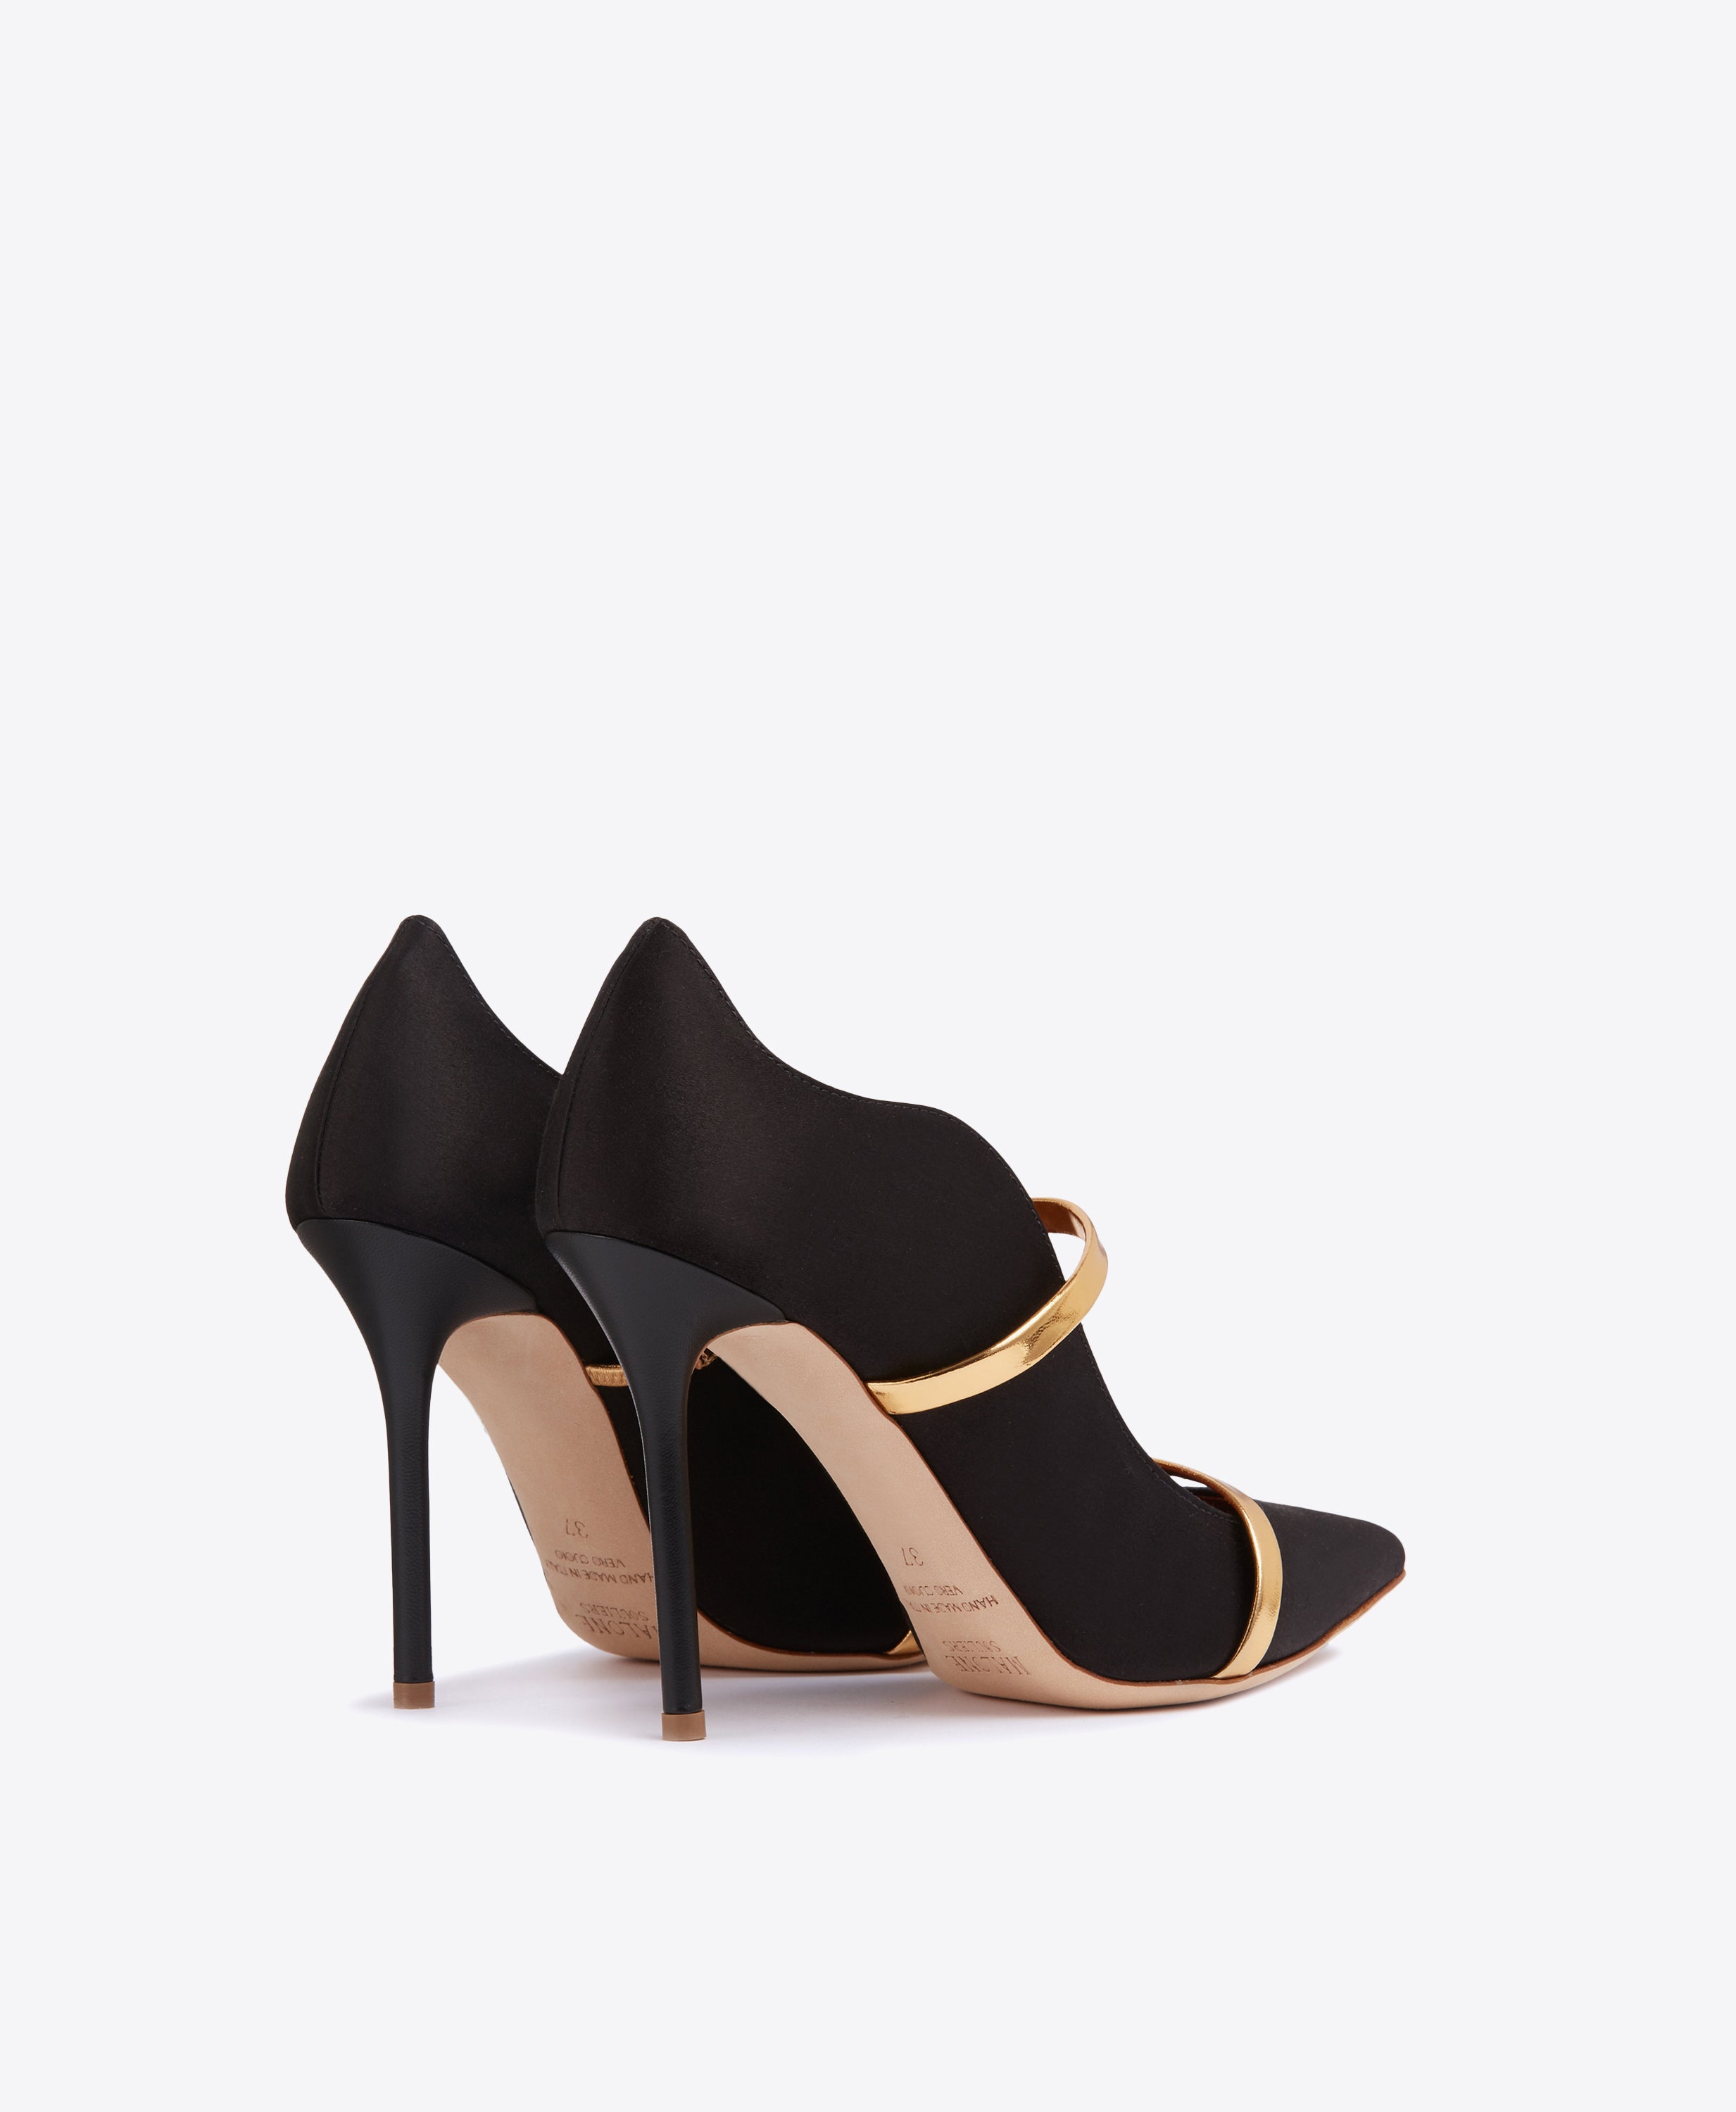 Nine West high heel shoes (black) Size 7 | Heels, High heel shoes, Black  shoes